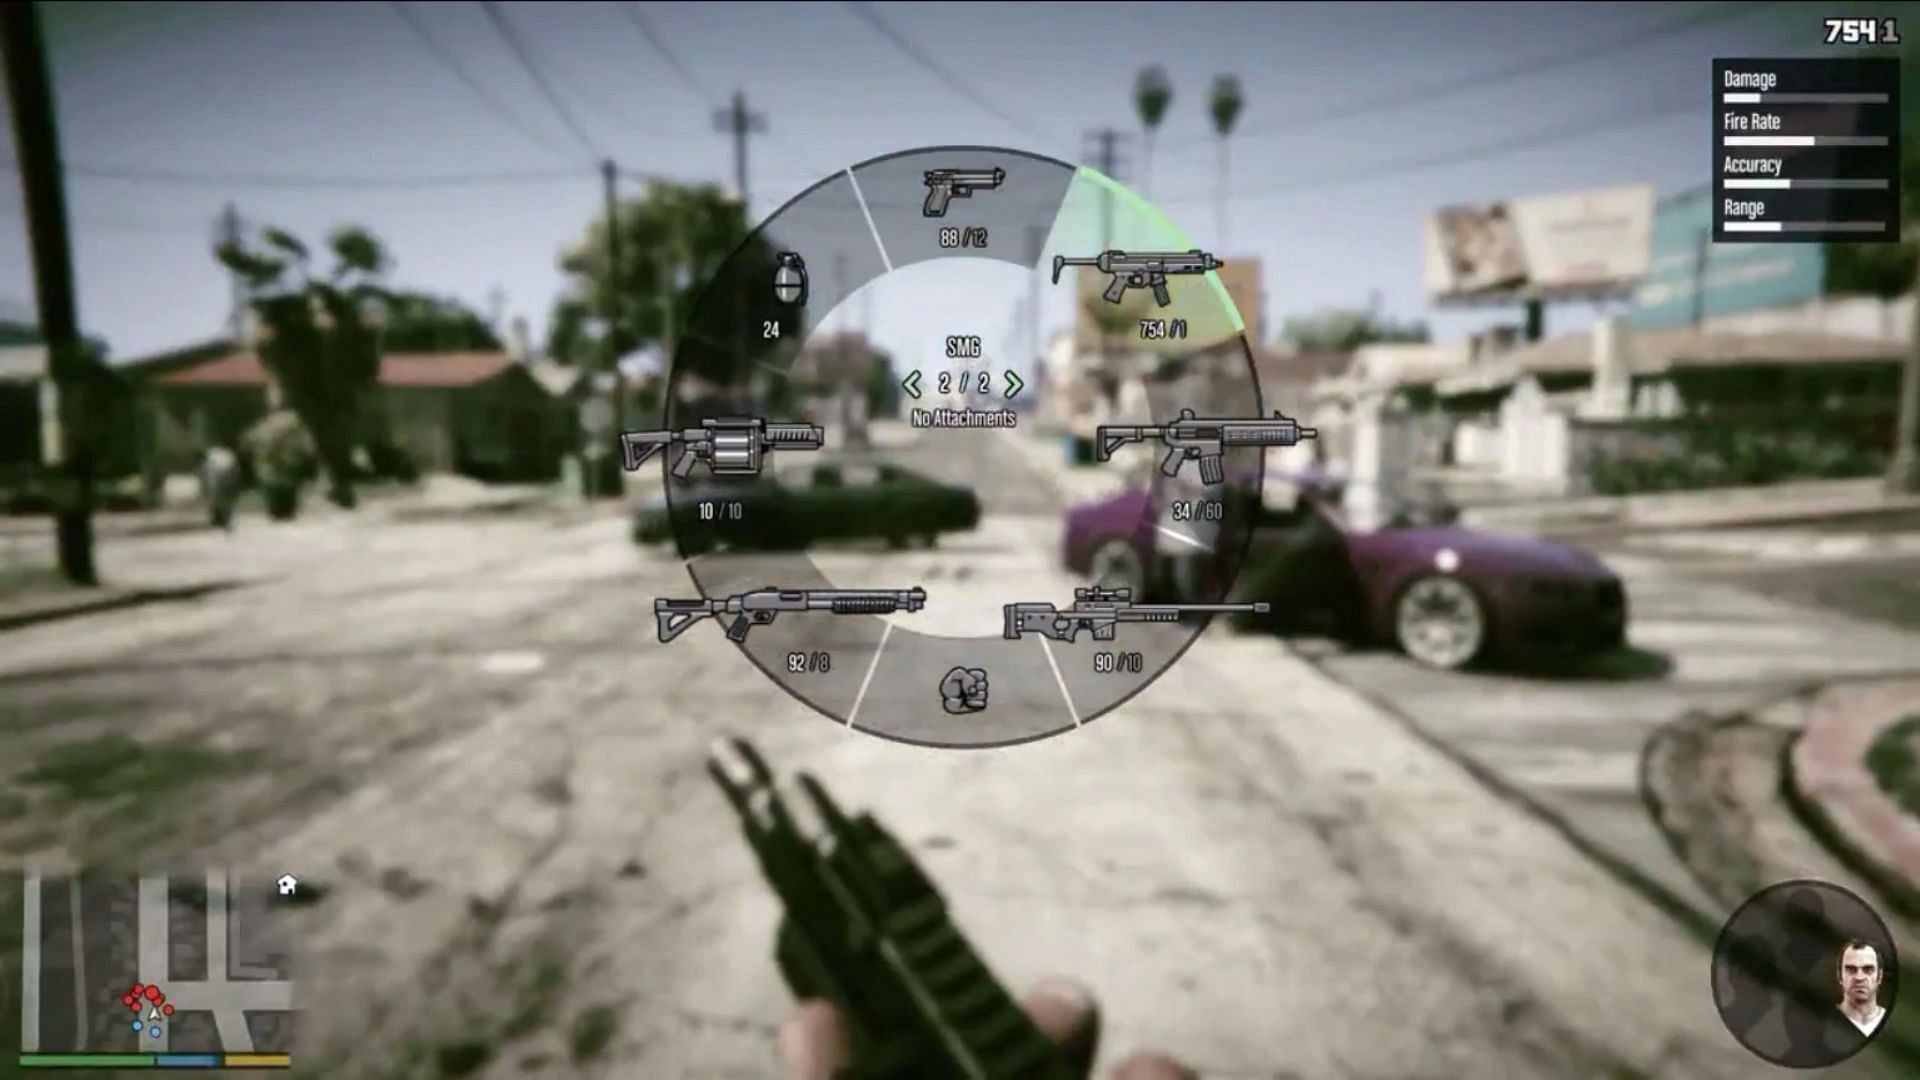 The Weapon Wheel, as it appears in GTA 5 (Image via Rockstar Games)